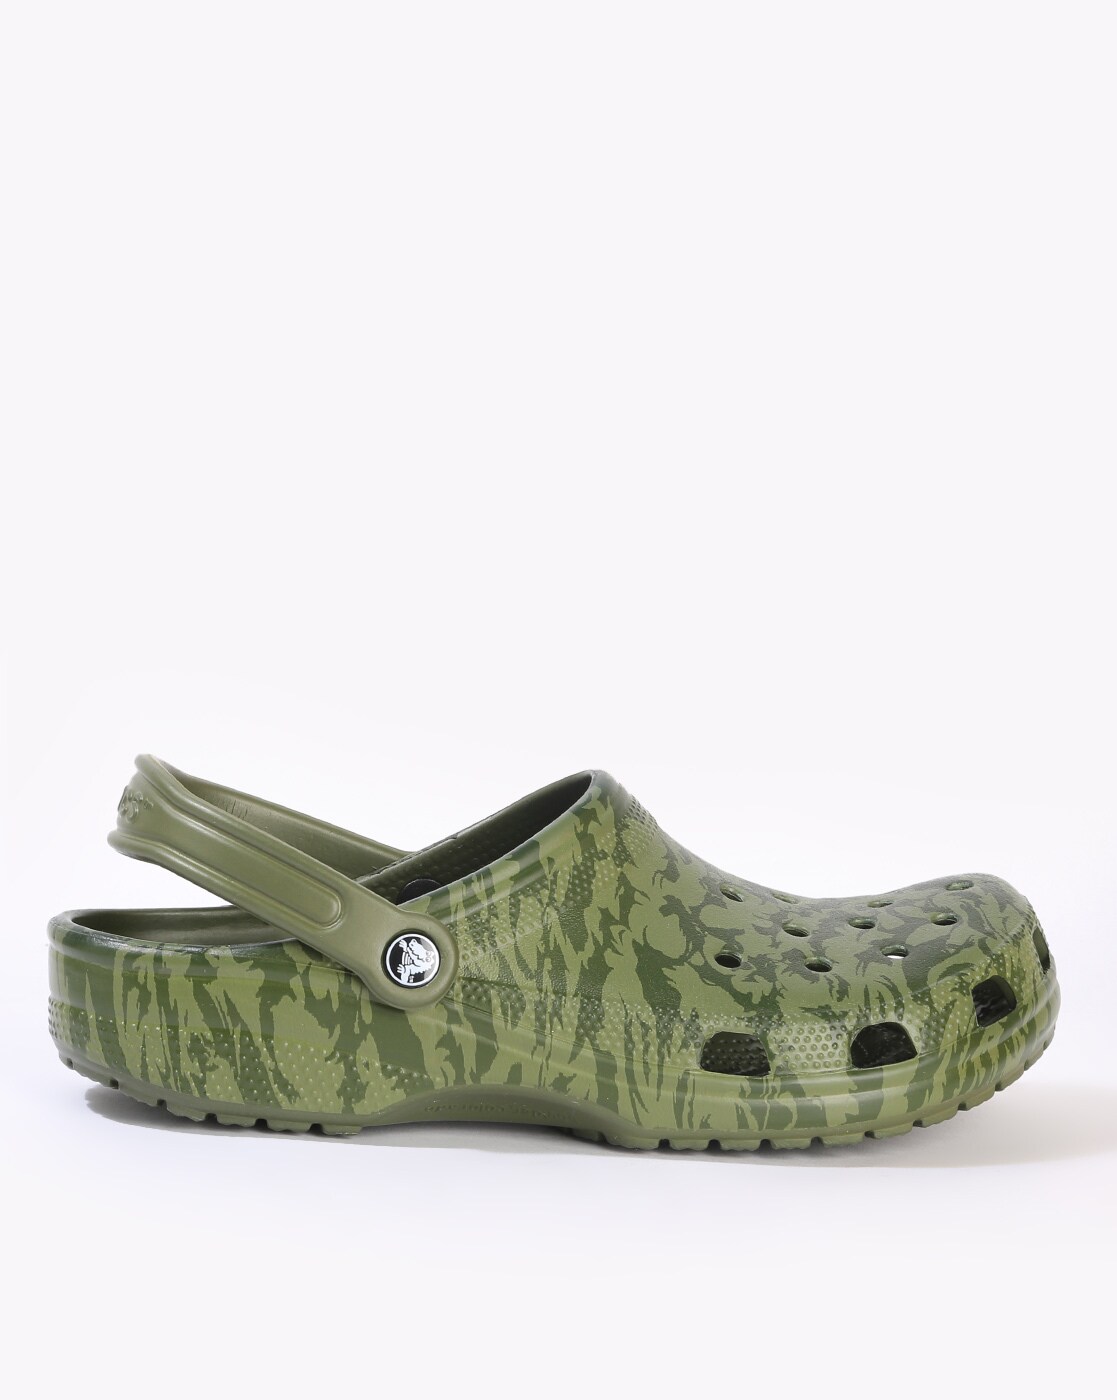 camouflage crocs for men